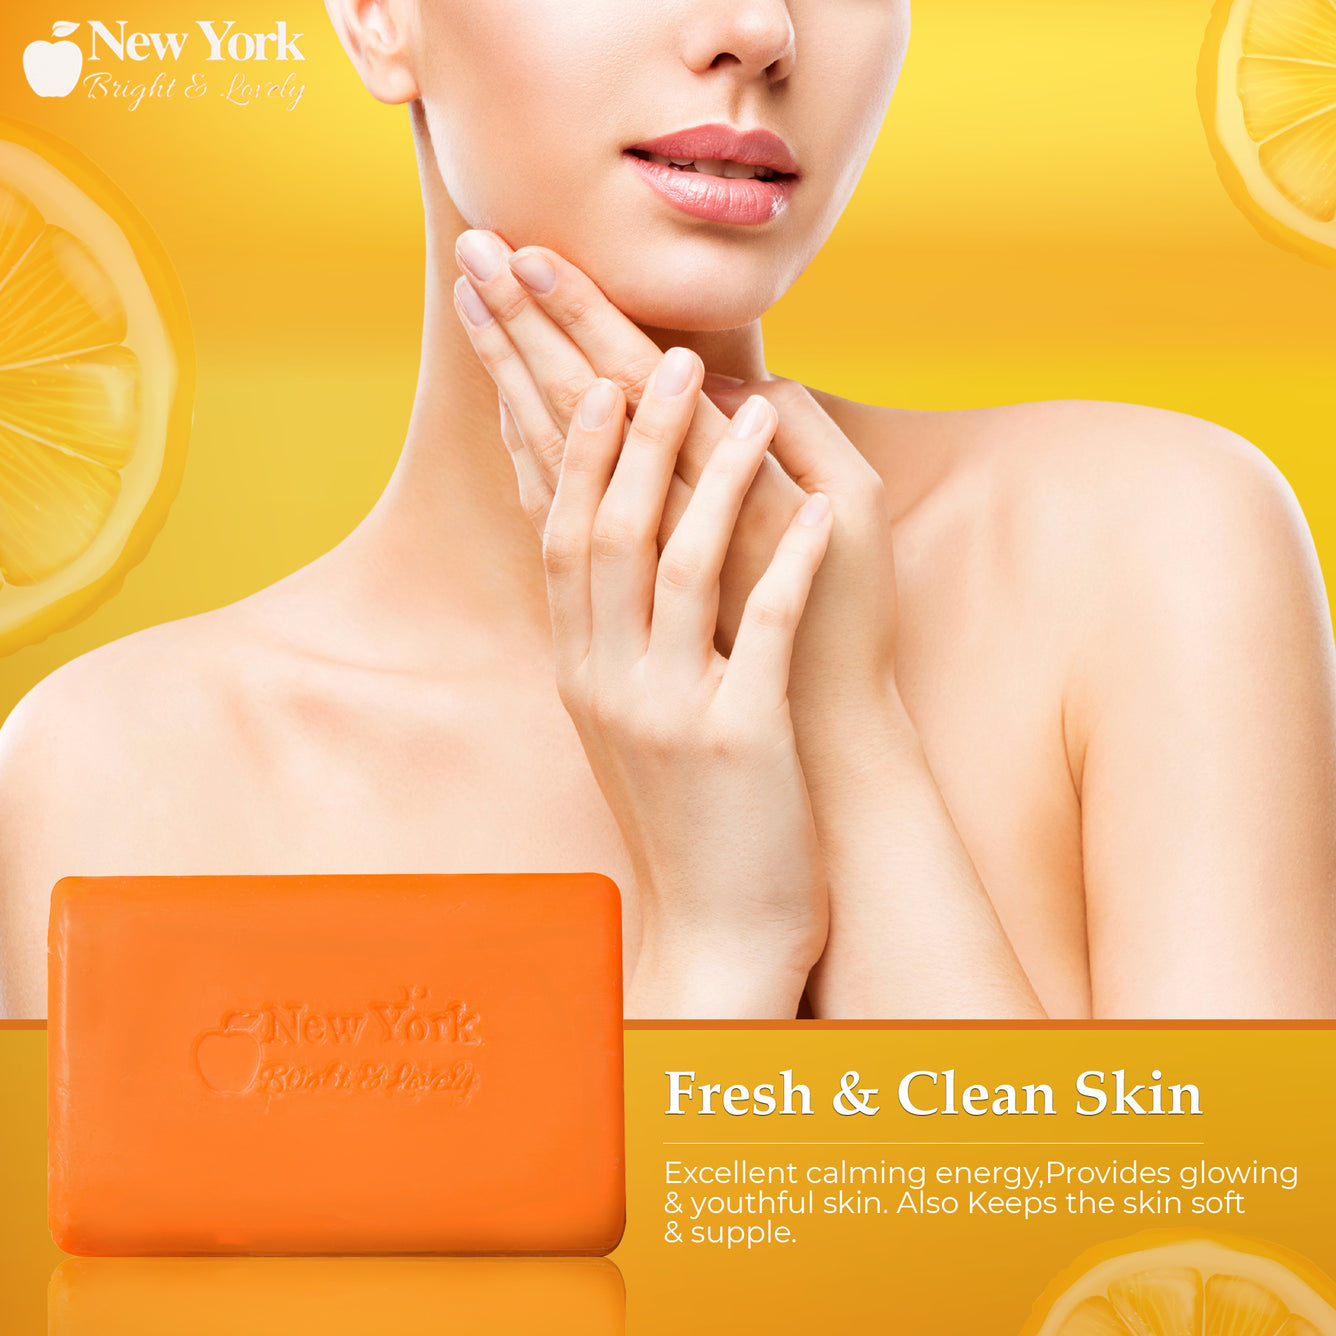 New York Bright & Lovely Beauty Soap w/Vit C 200g